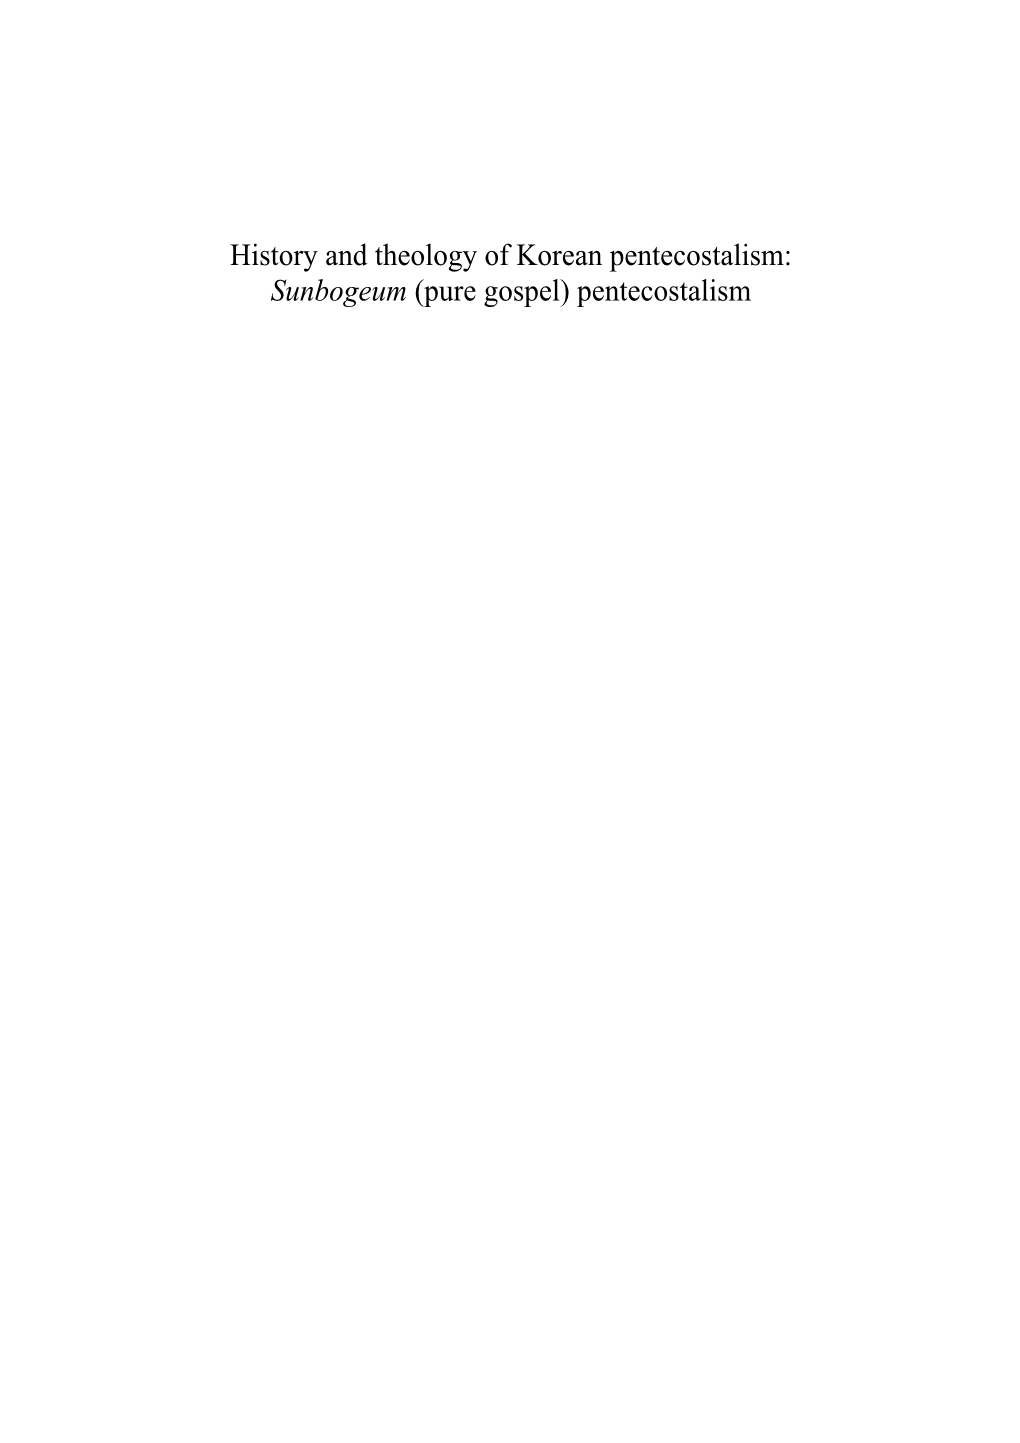 History and Theology of Korean Pentecostalism: Sunbogeum (Pure Gospel) Pentecostalism